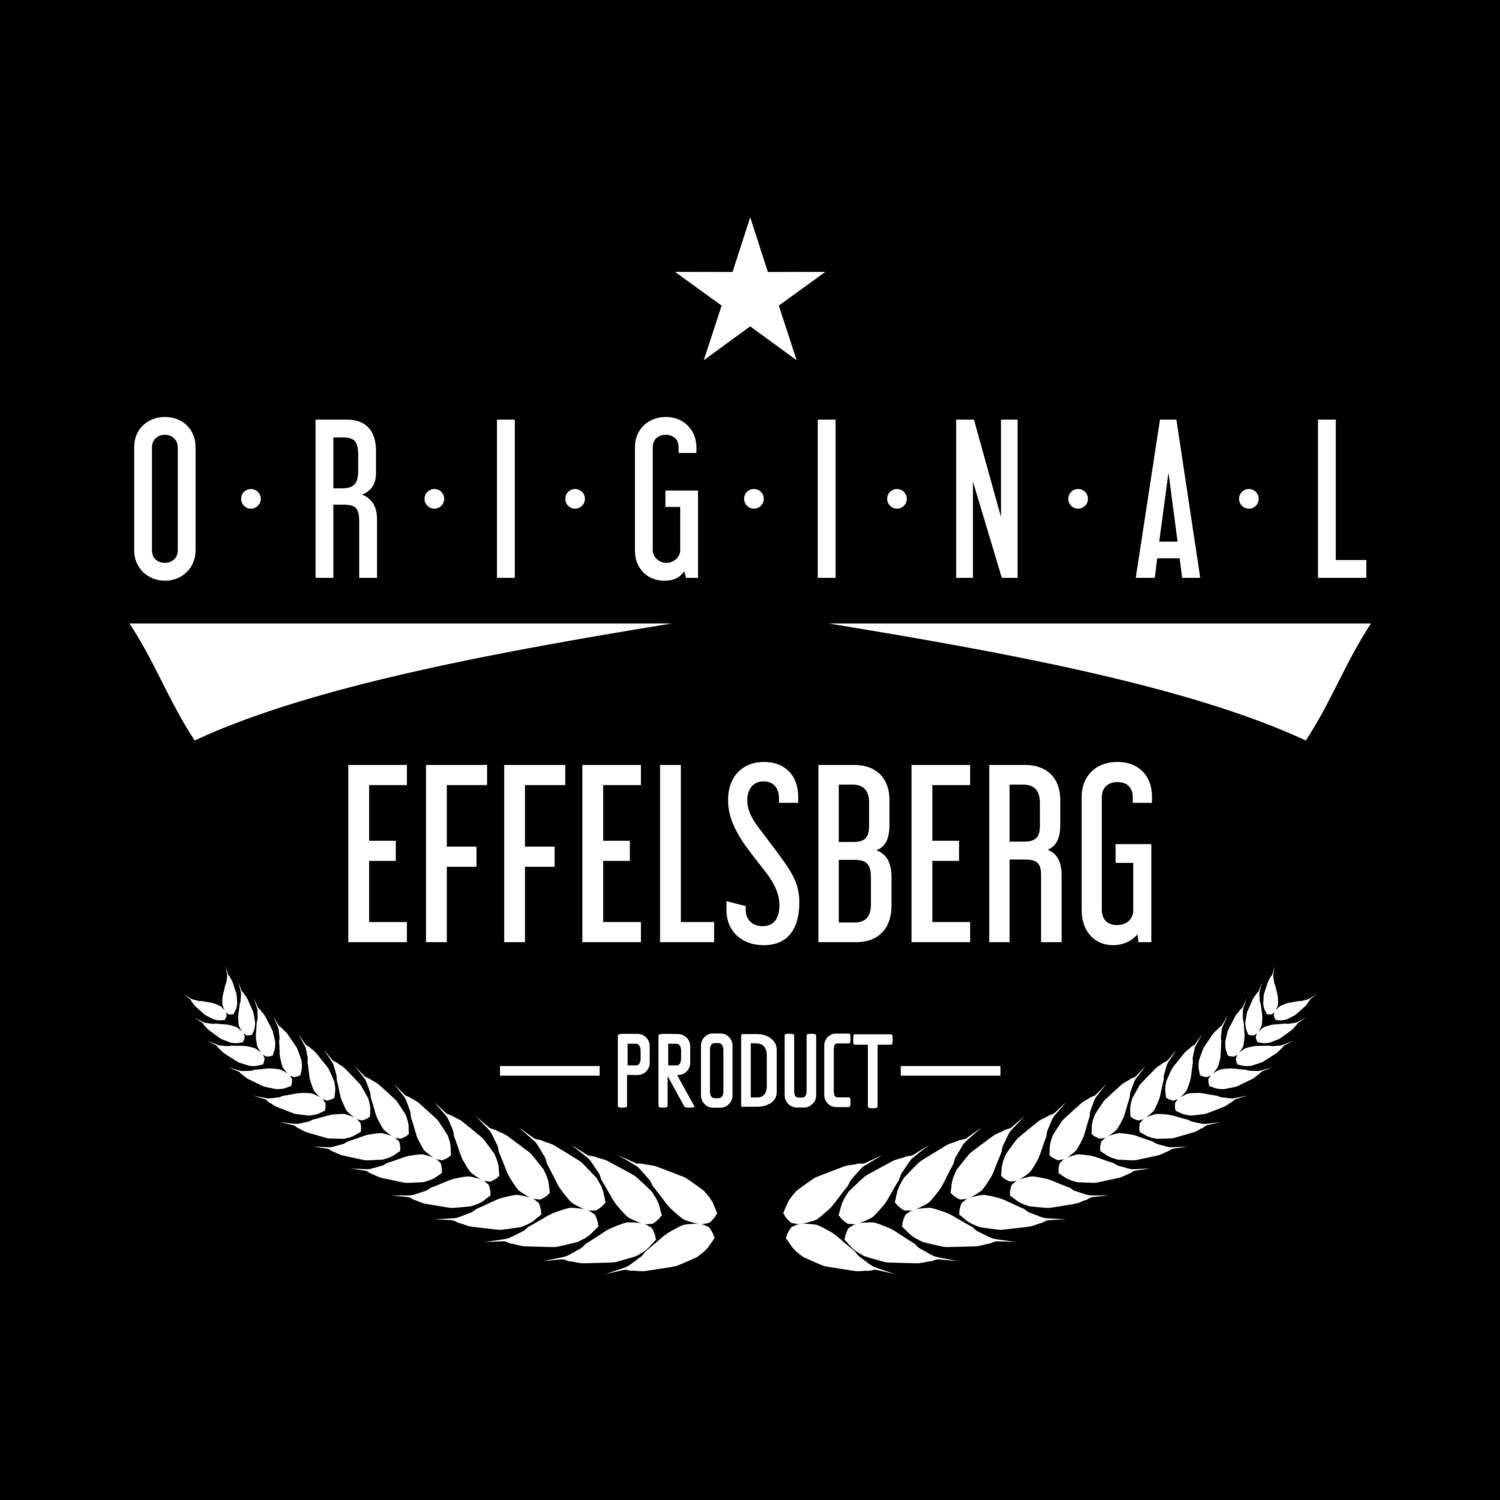 Effelsberg T-Shirt »Original Product«